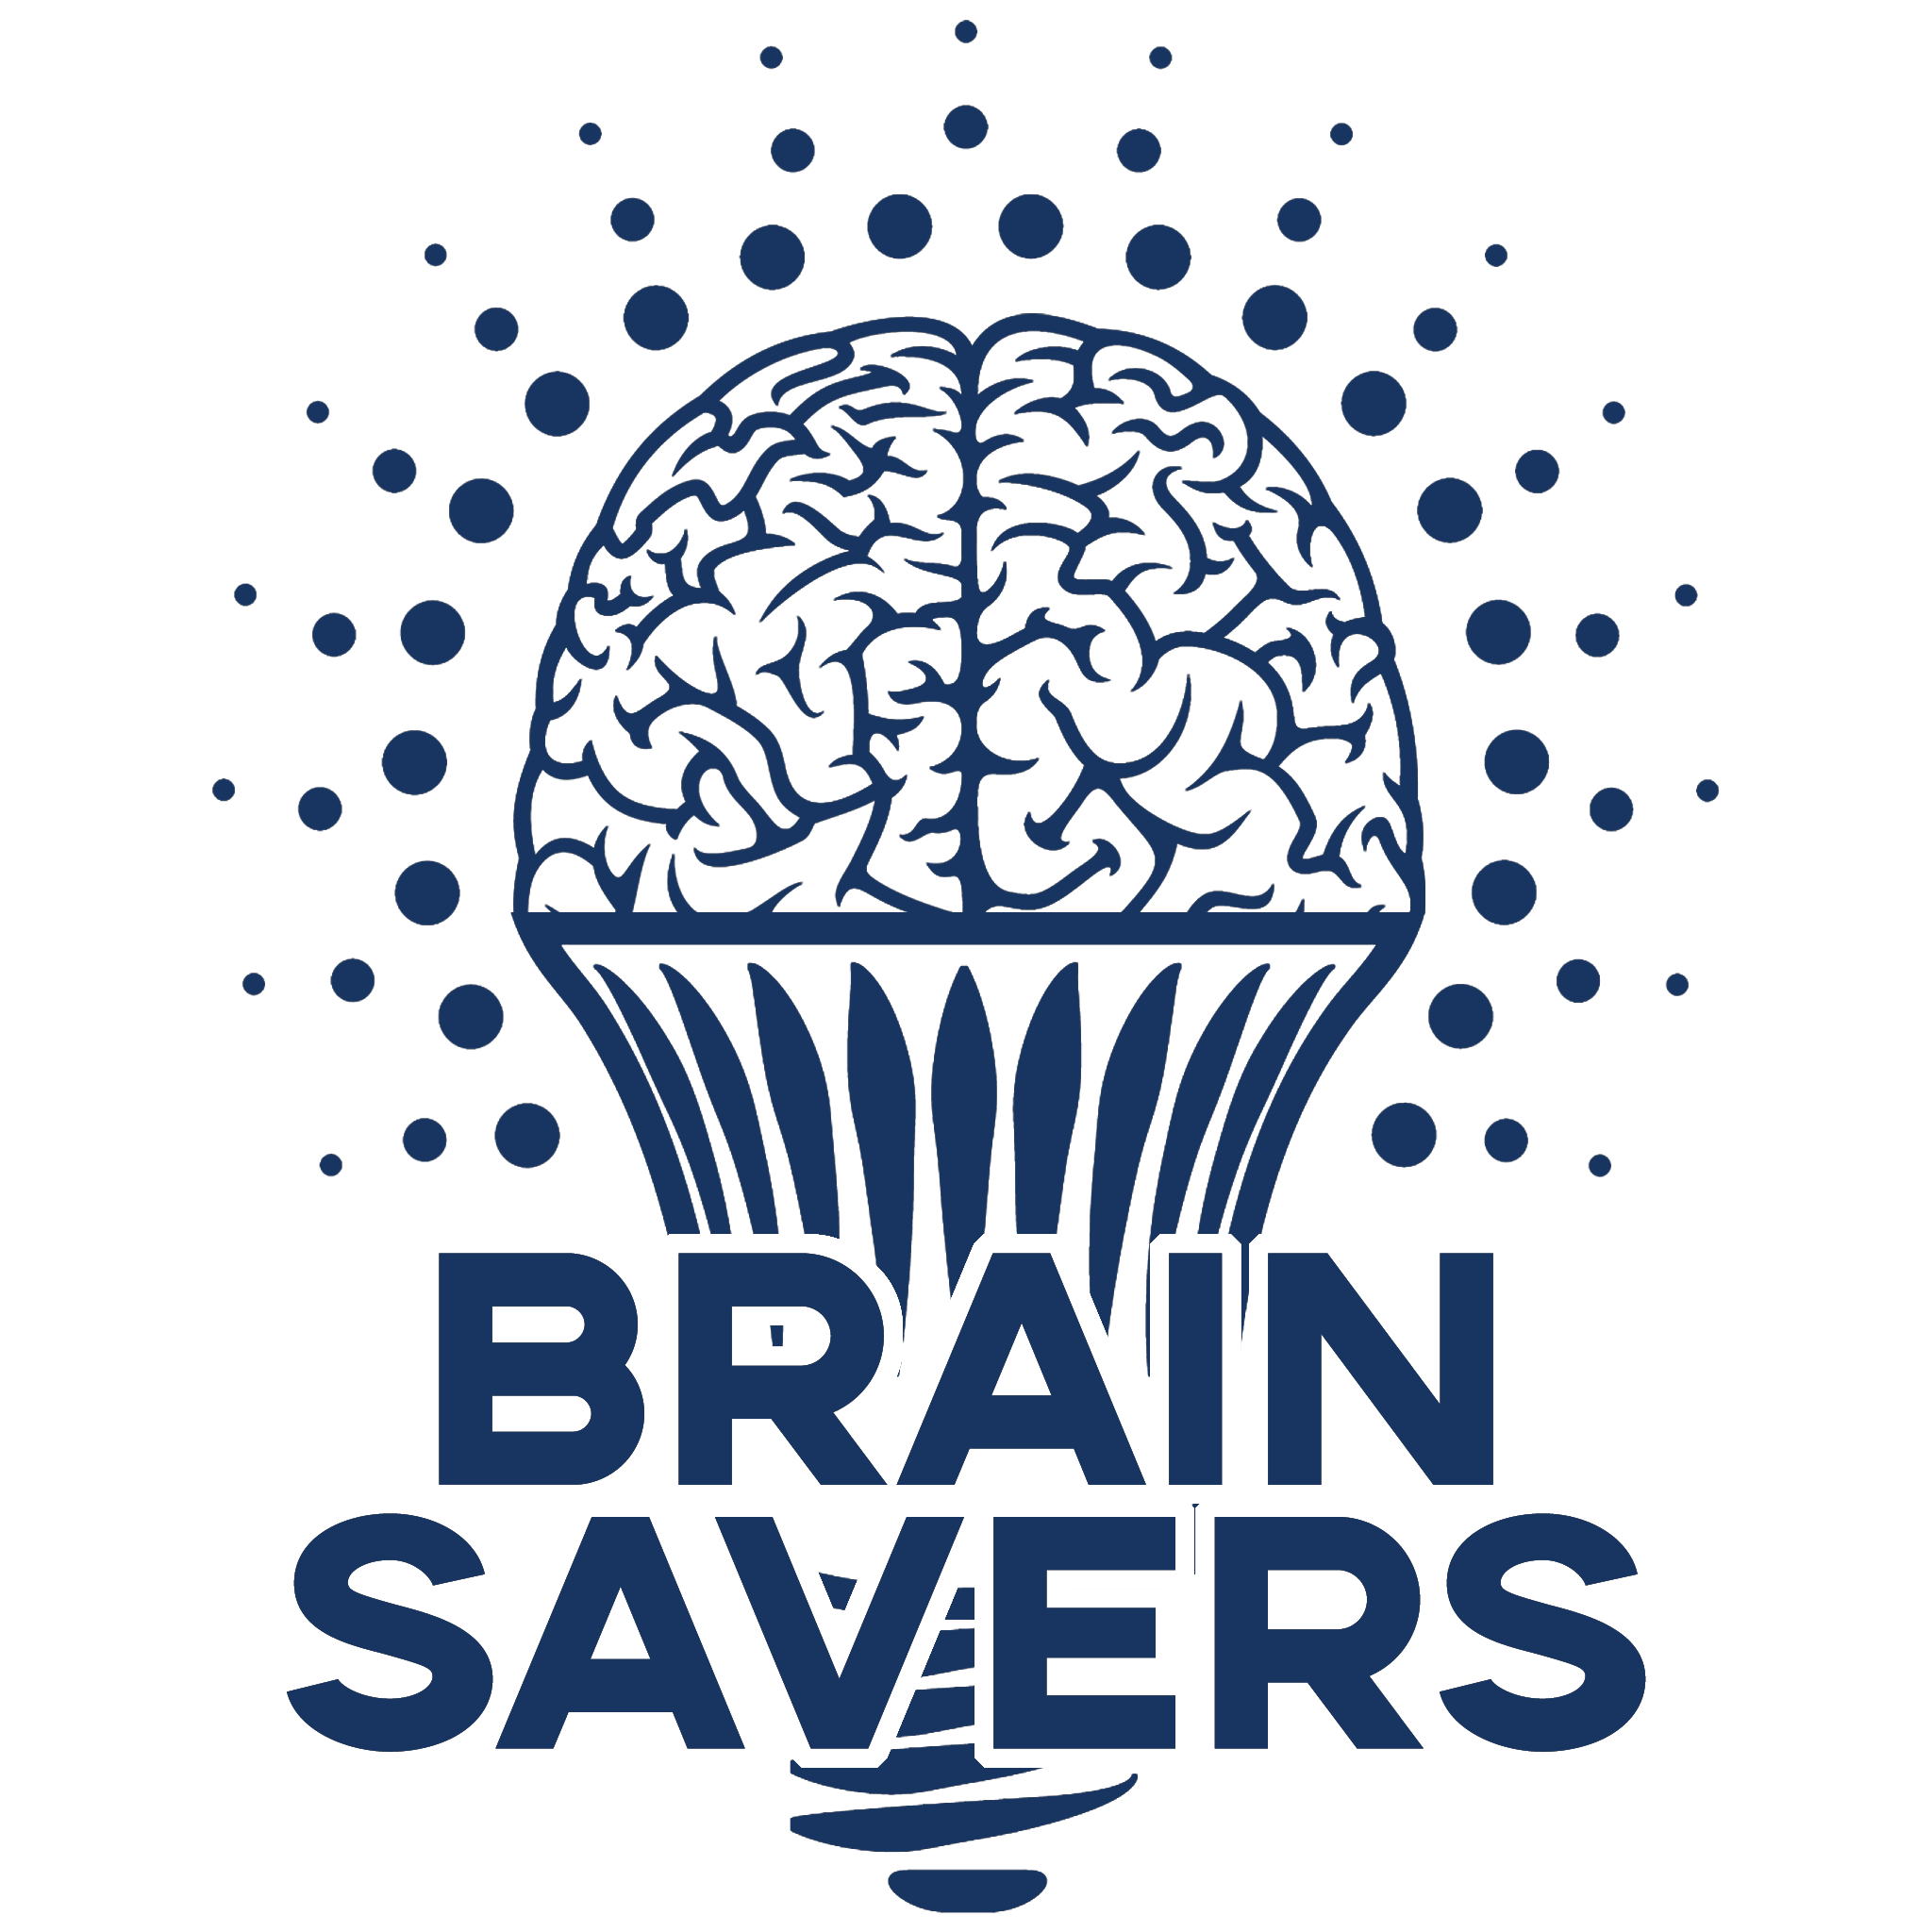 Brainsavers